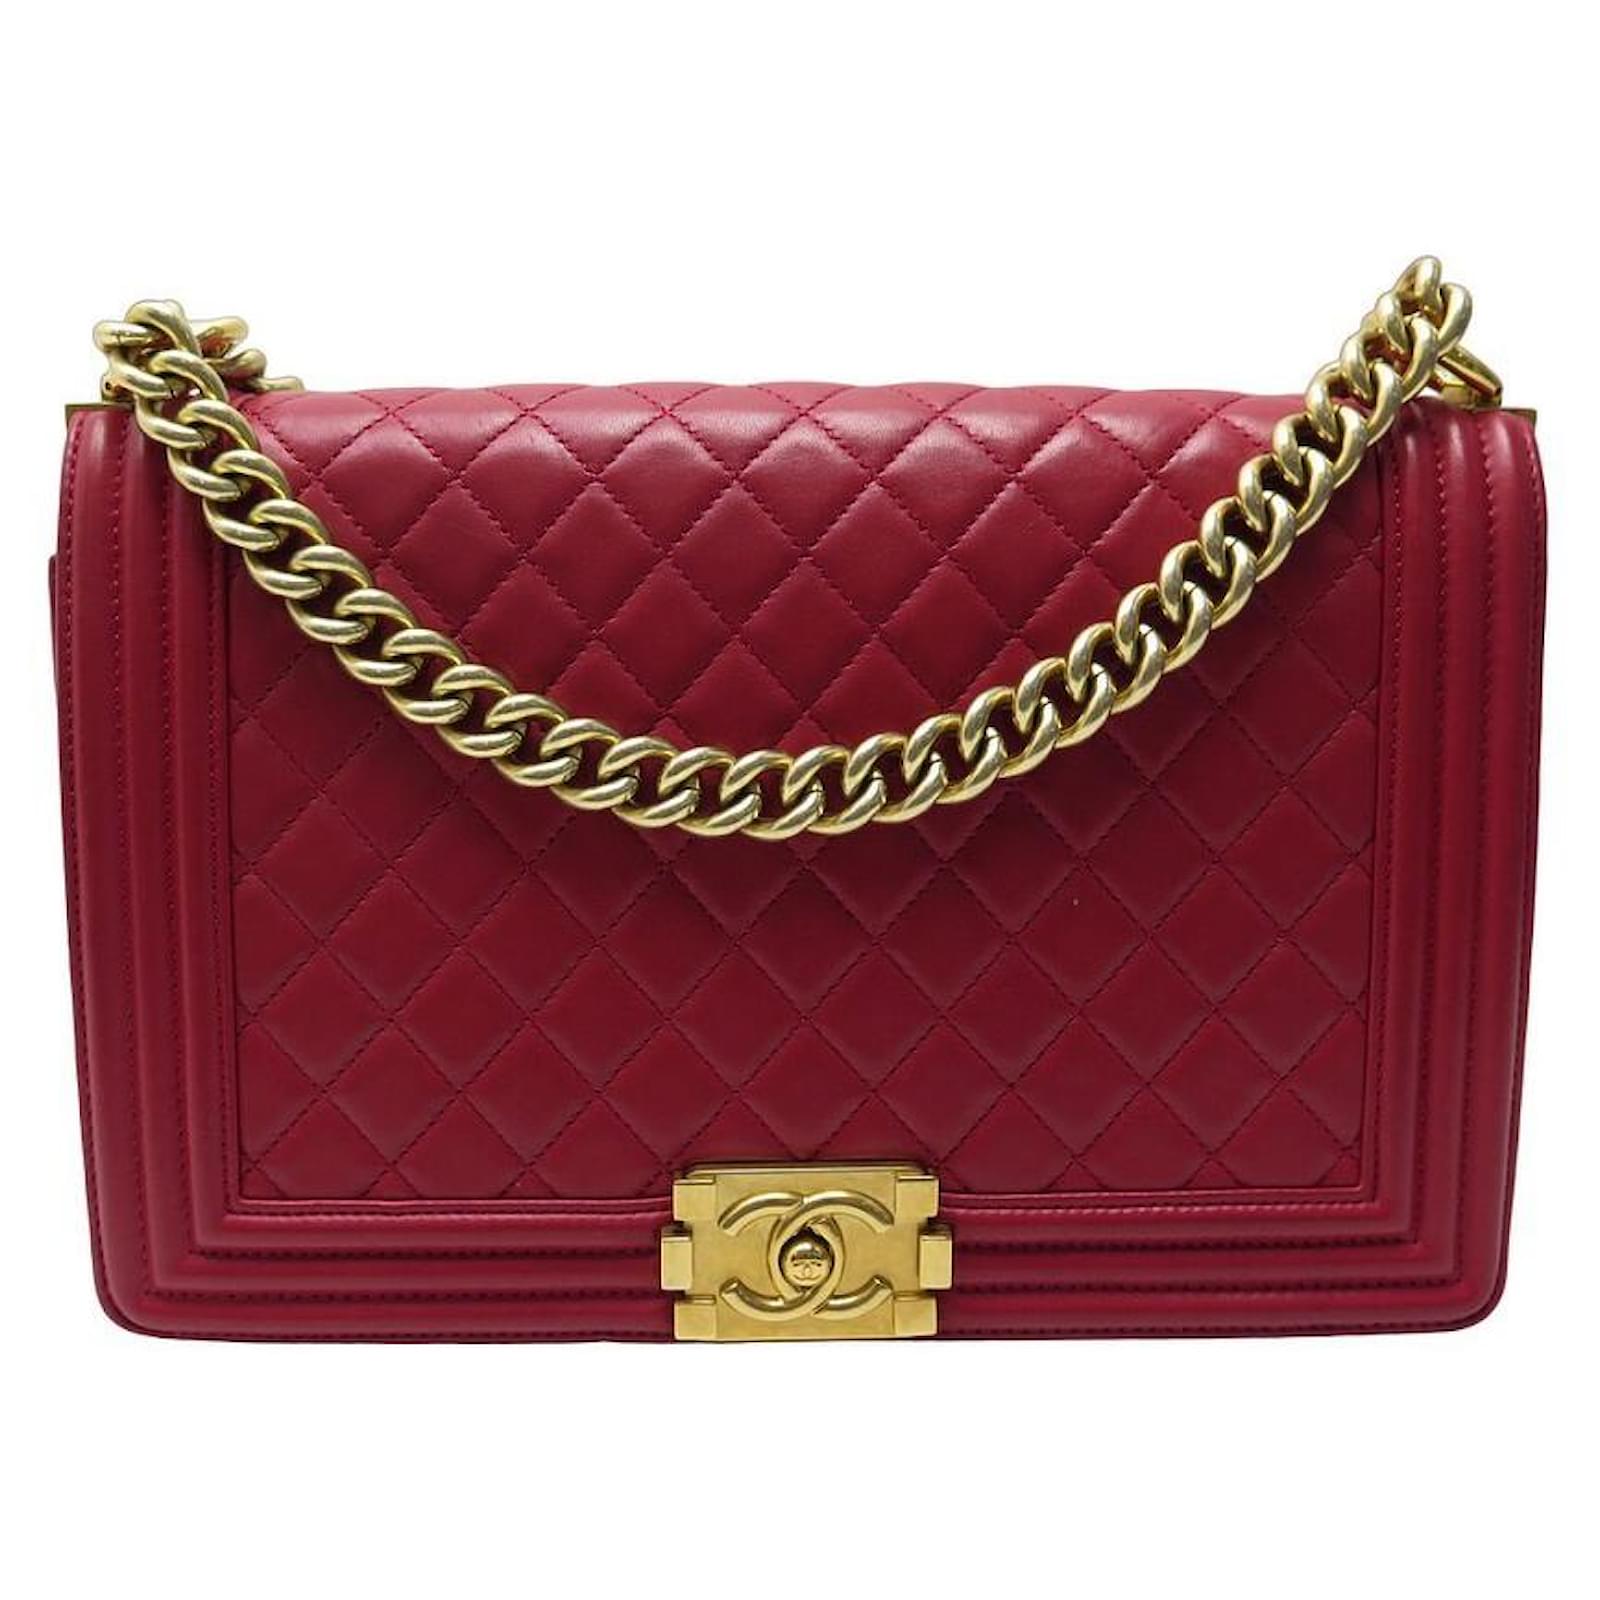 Handbags Chanel Chanel Grand Boy Handbag Red Quilted Leather Crossbody Handbag Purse